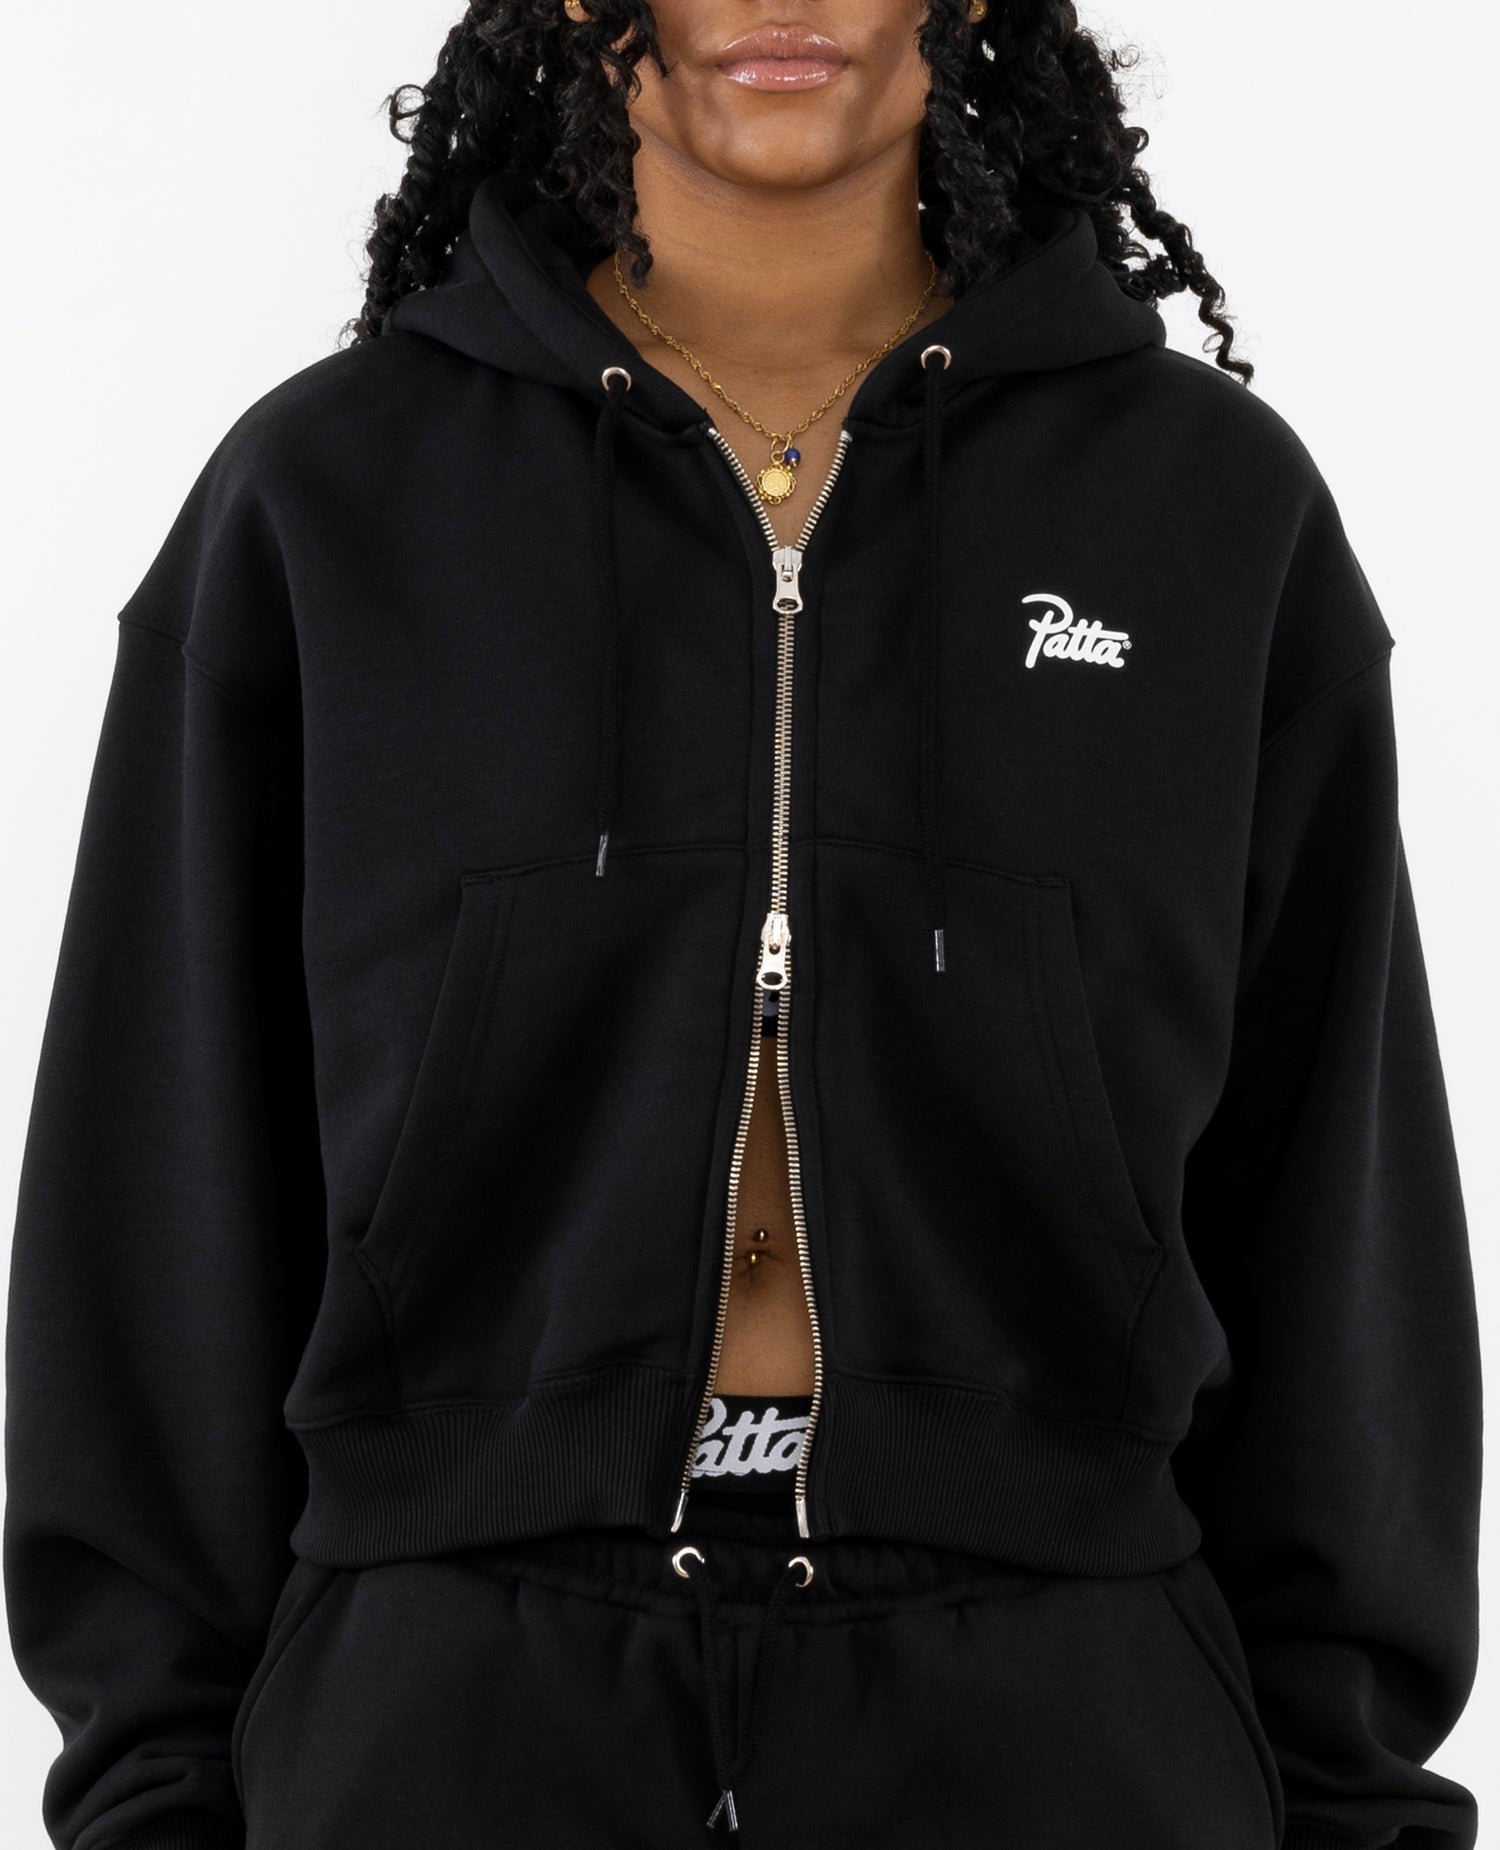 Patta Femme Basic Cropped Zip Hooded Sweater (Black)